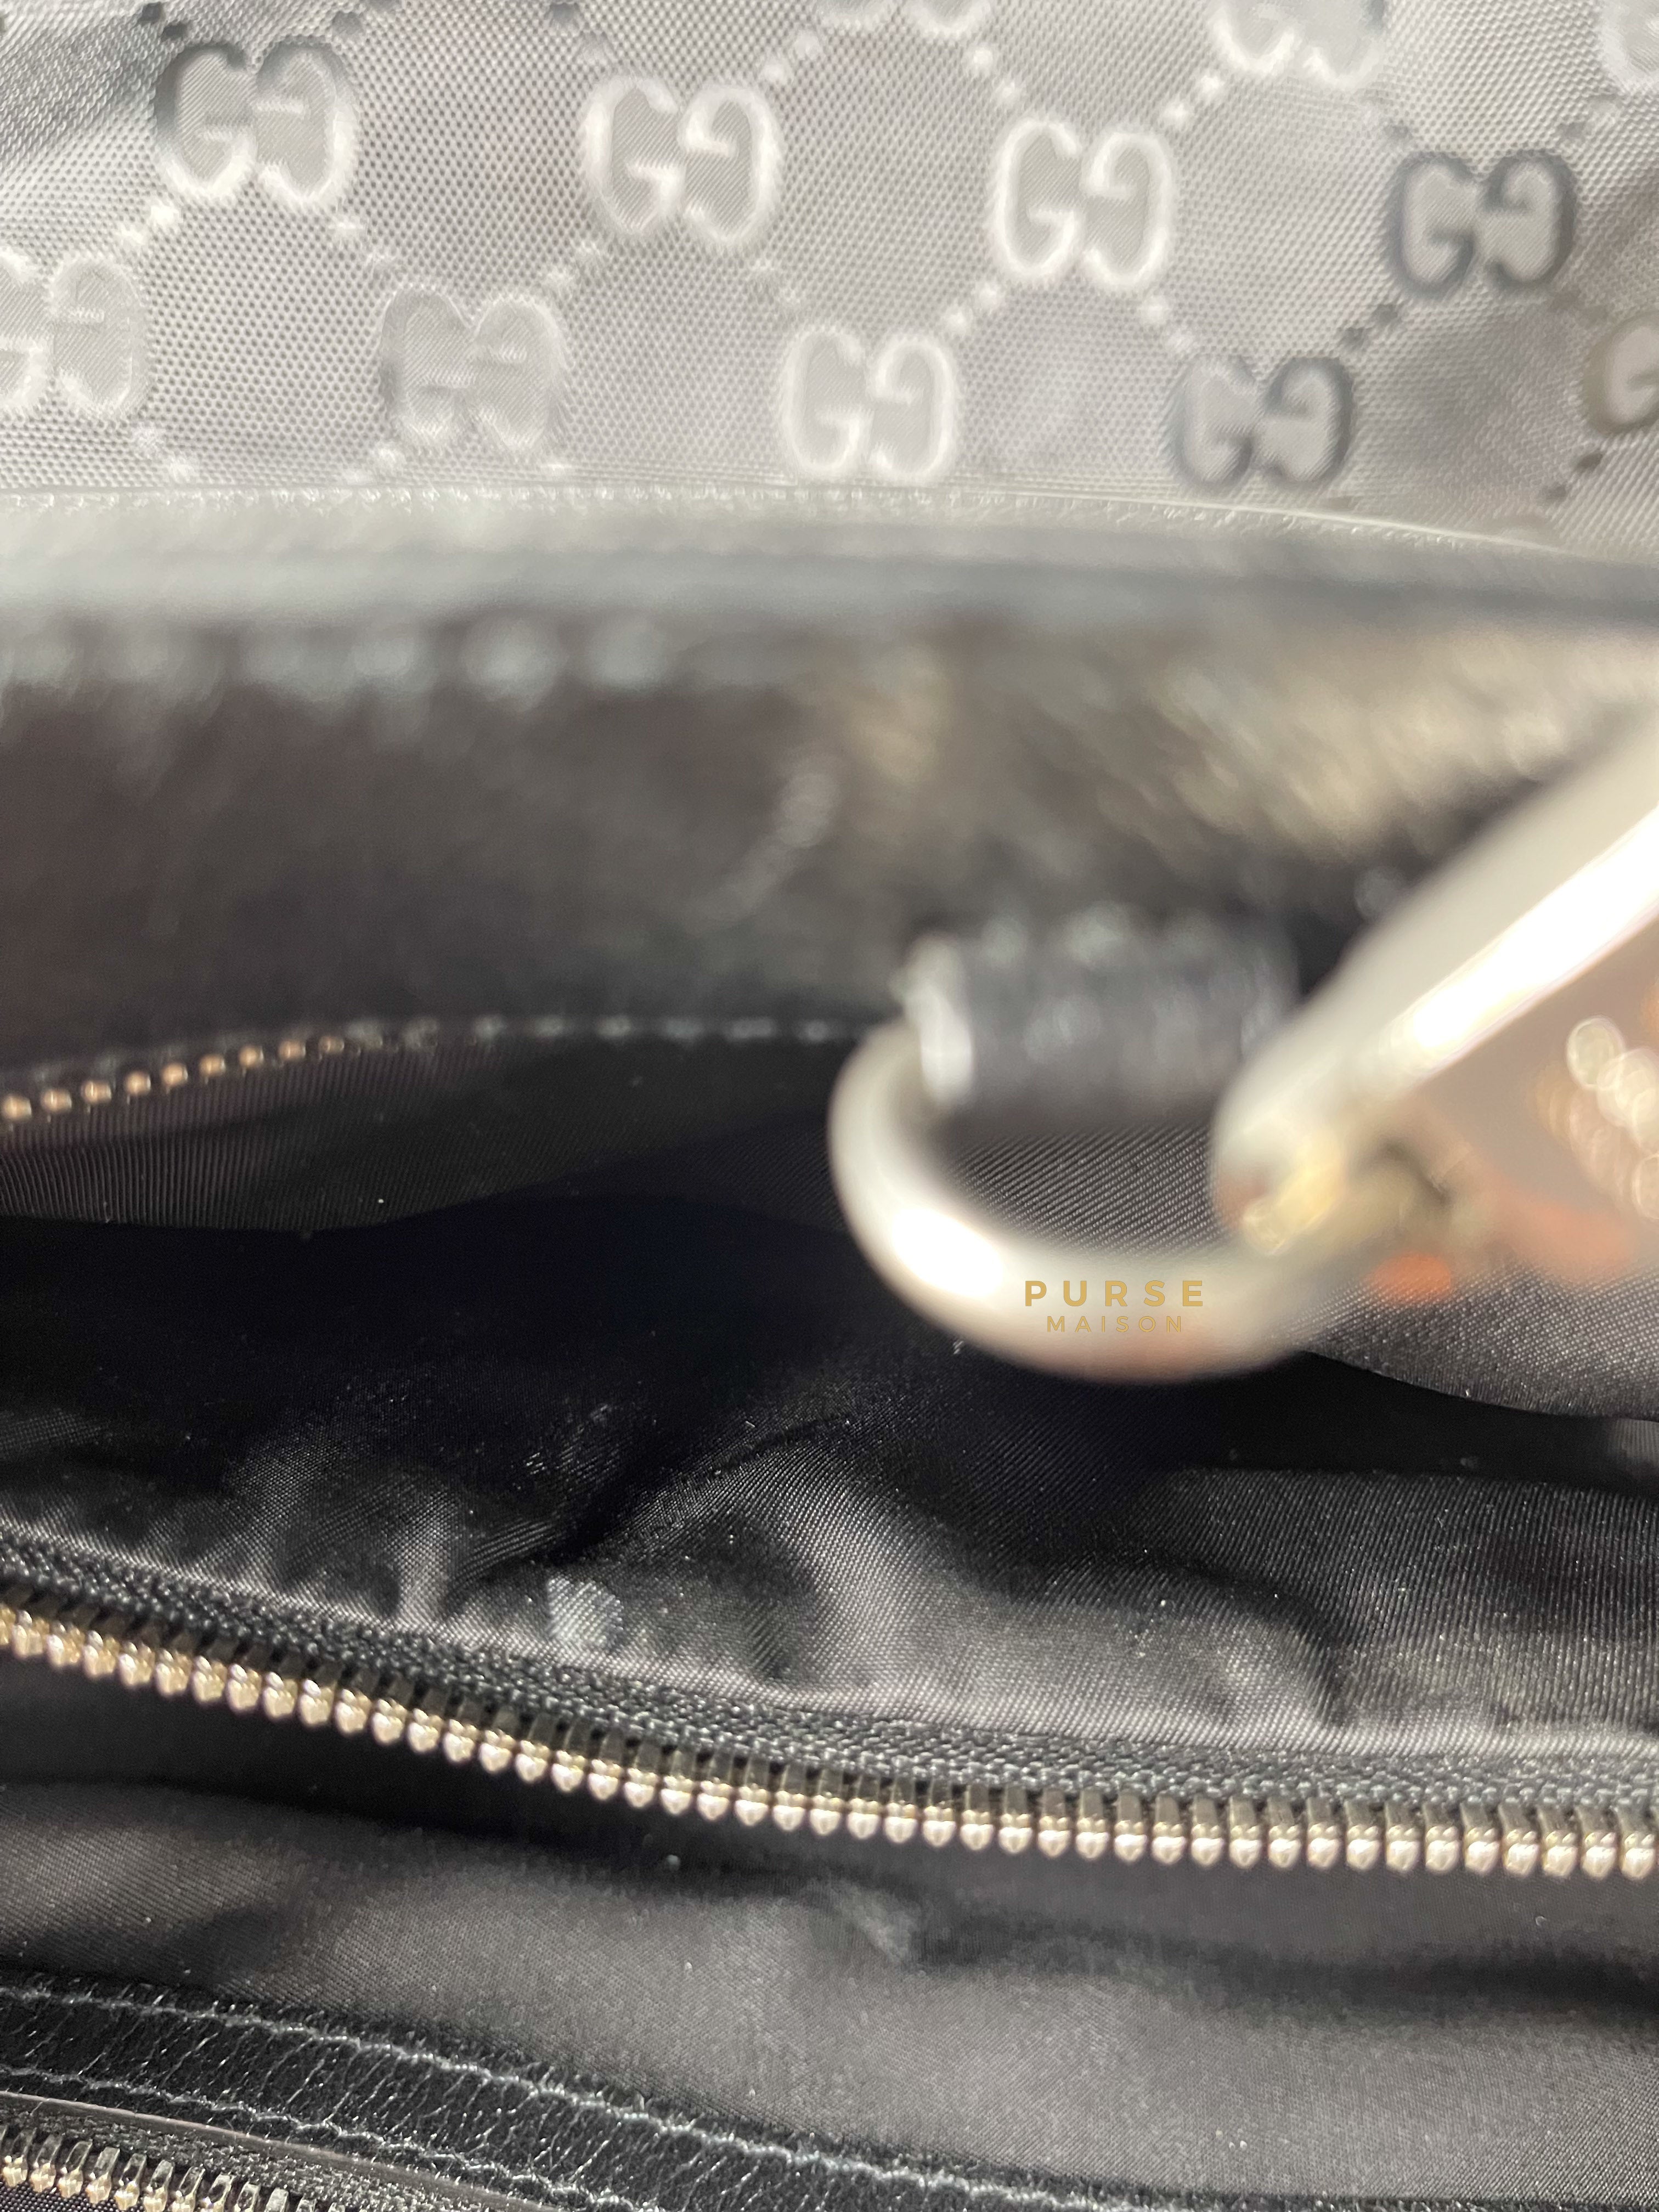 Gucci Off the Grid Black Long Tote Bag | Purse Maison Luxury Bags Shop